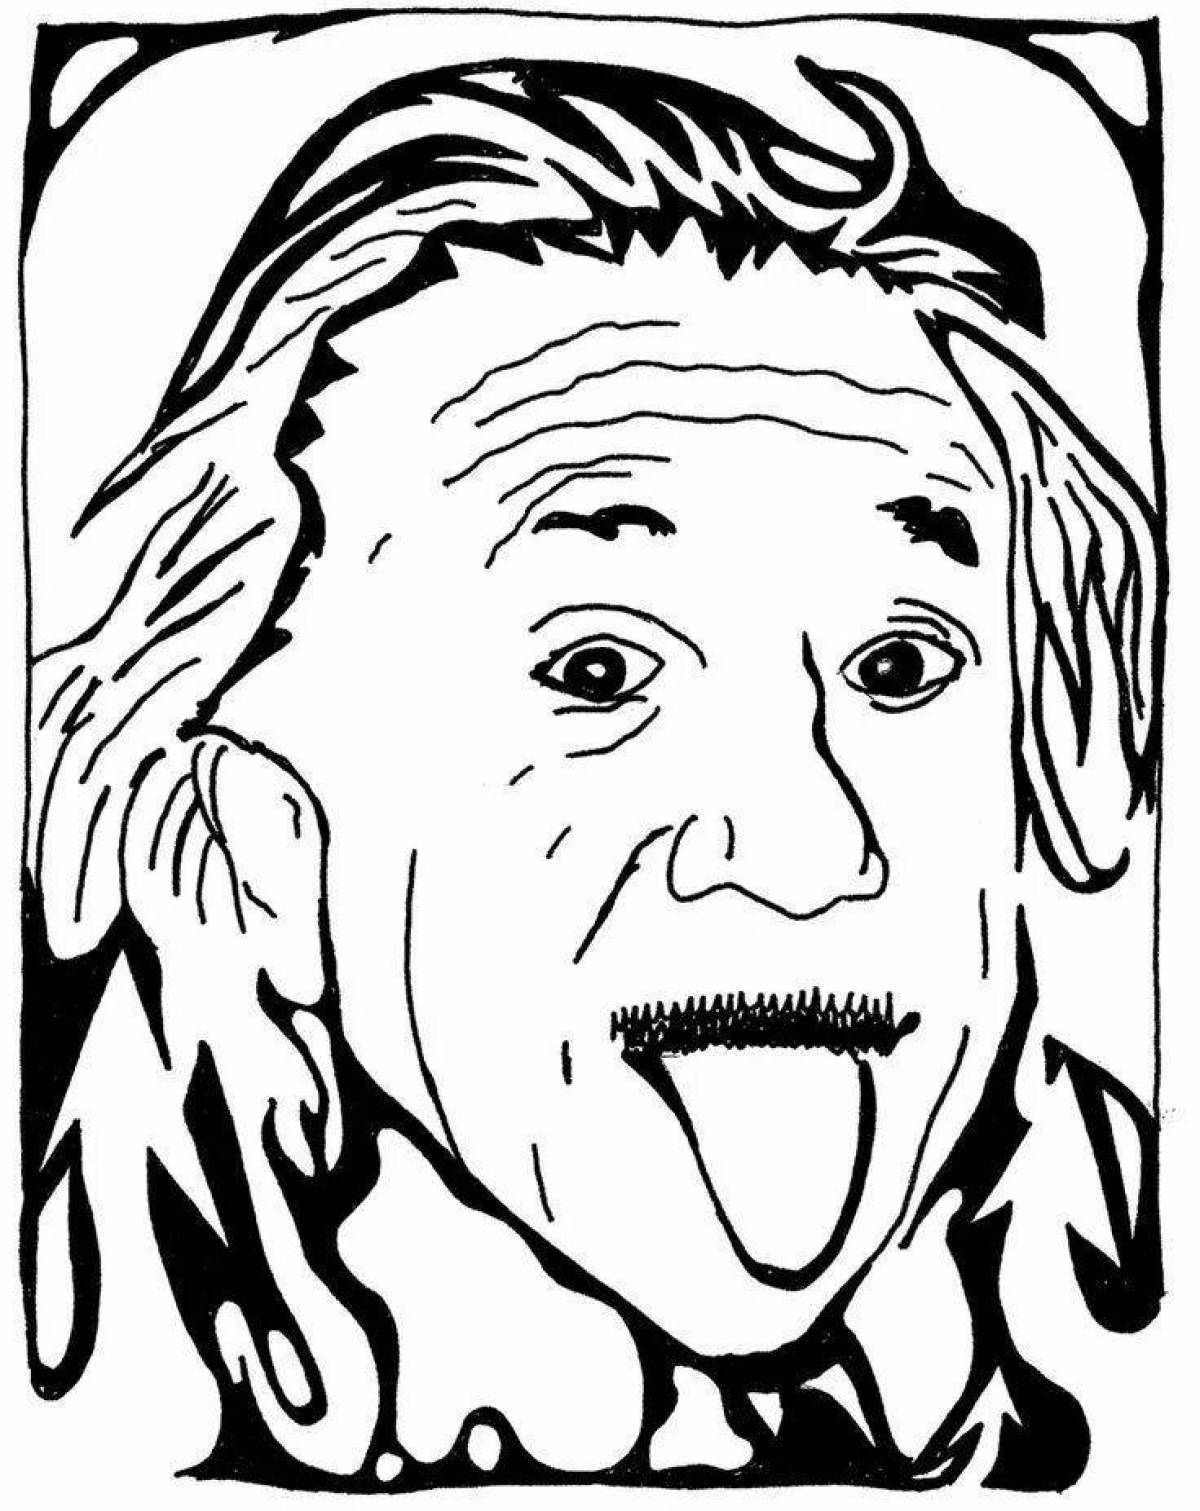 Einstein's fun coloring book